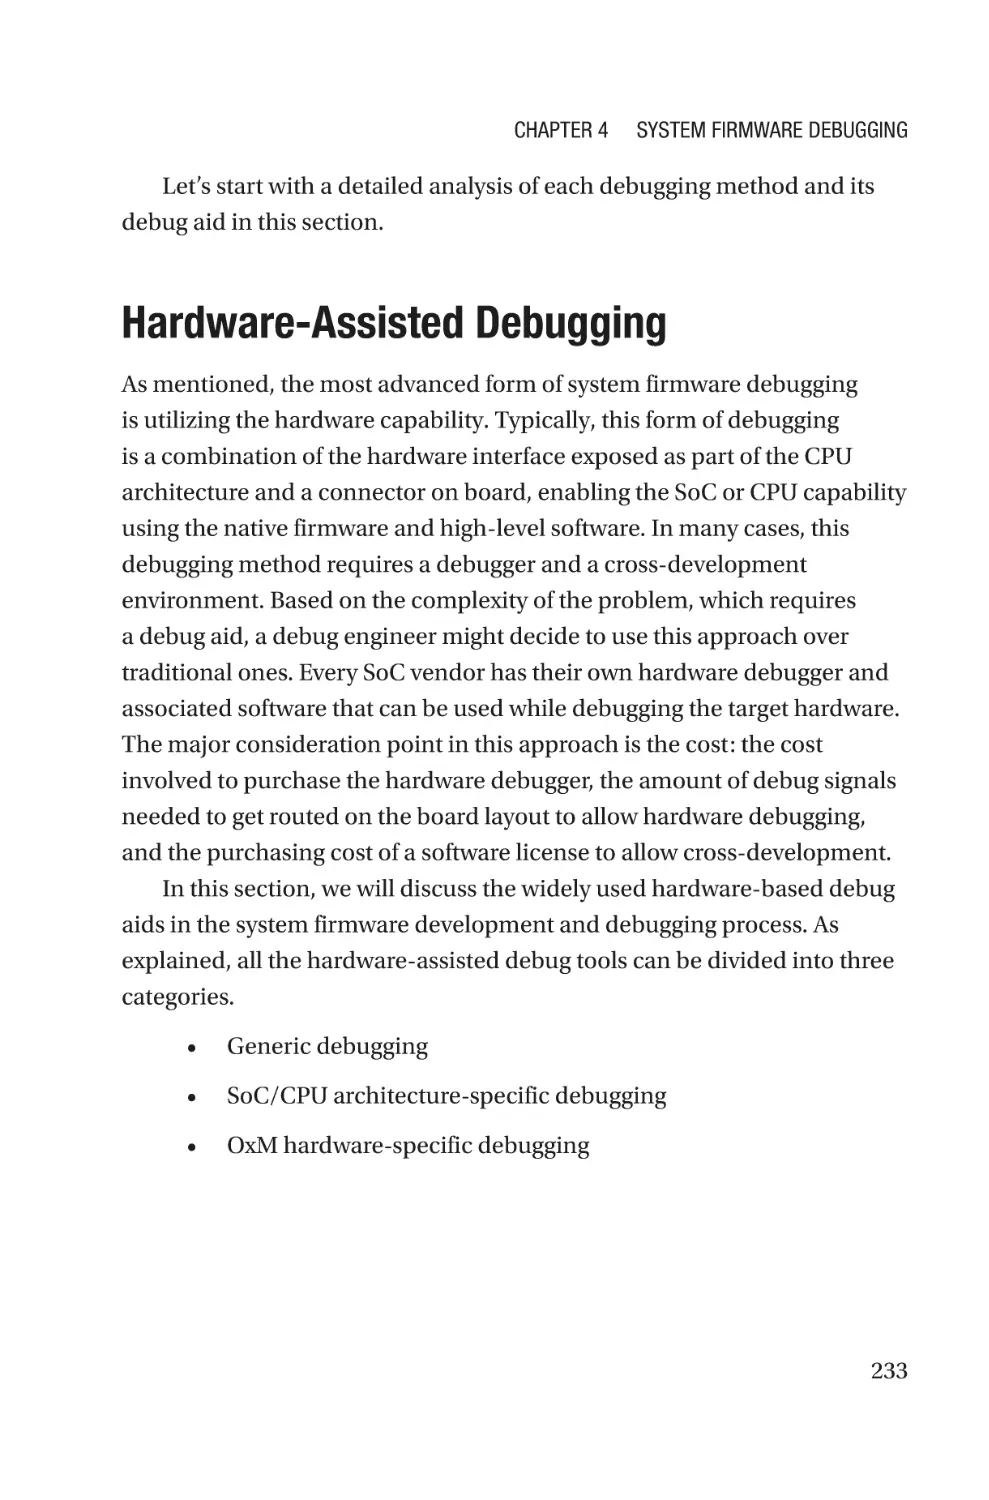 Hardware-Assisted Debugging